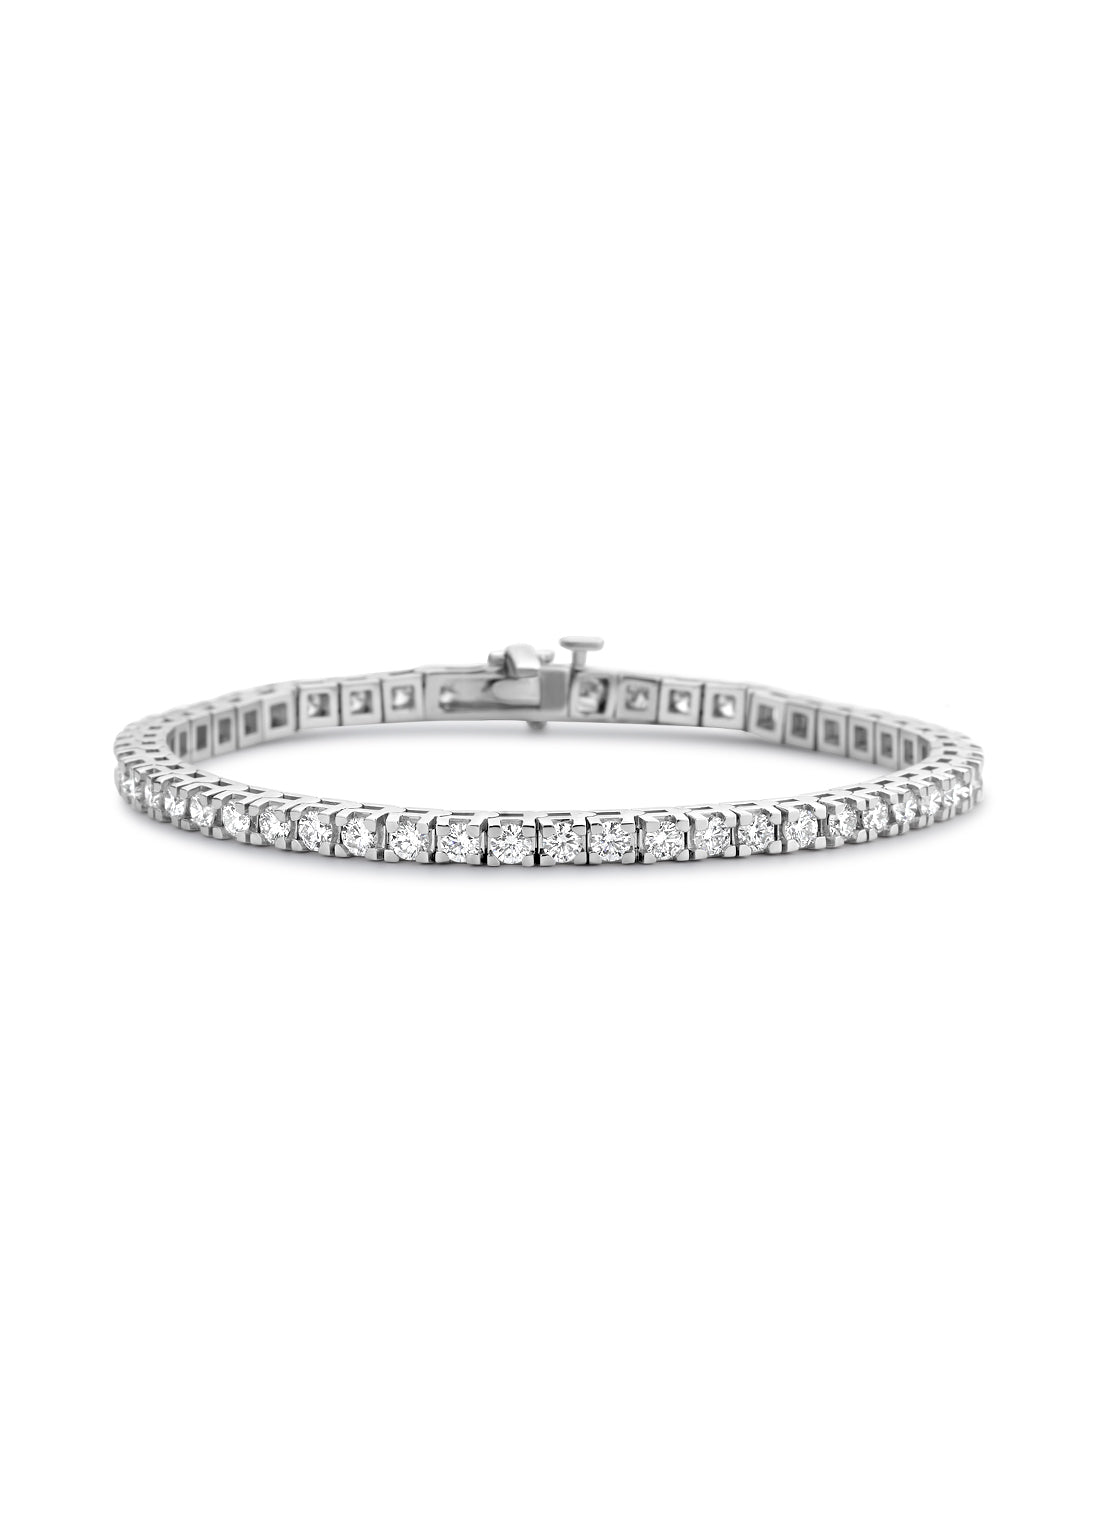 Tennis bracelet, 4.00 ct diamond